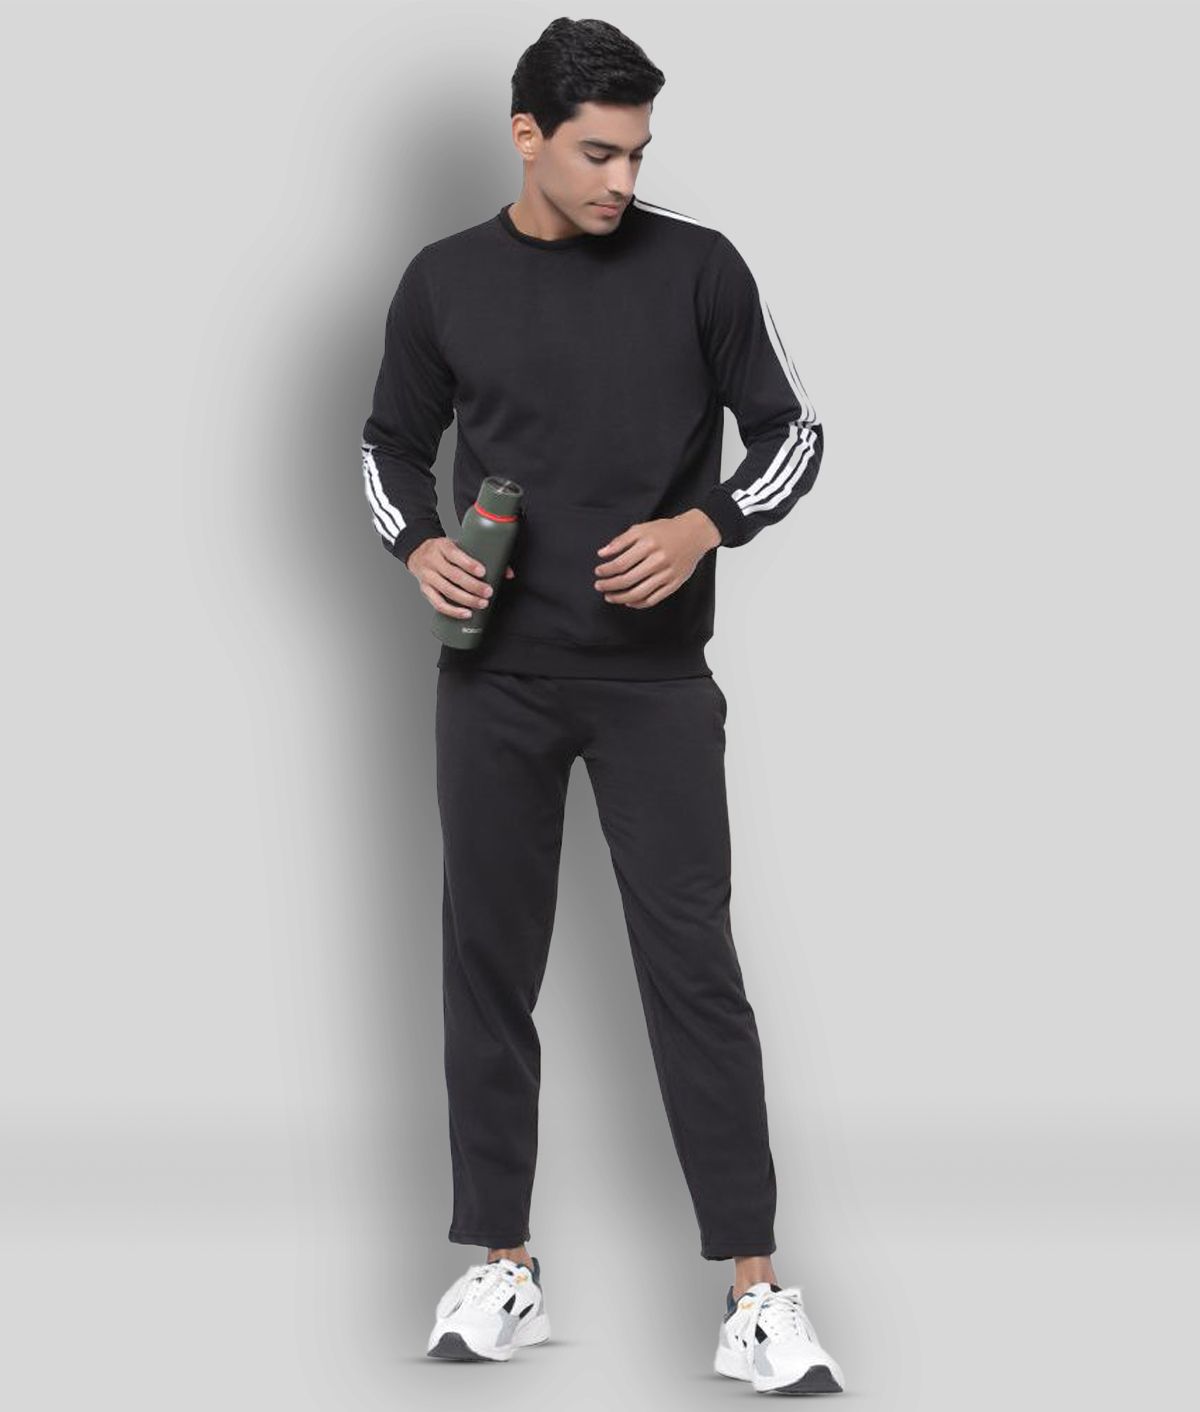 KZALCON - Black Cotton Blend Regular Fit Striped Men's Sports Tracksuit ( Pack of 1 )